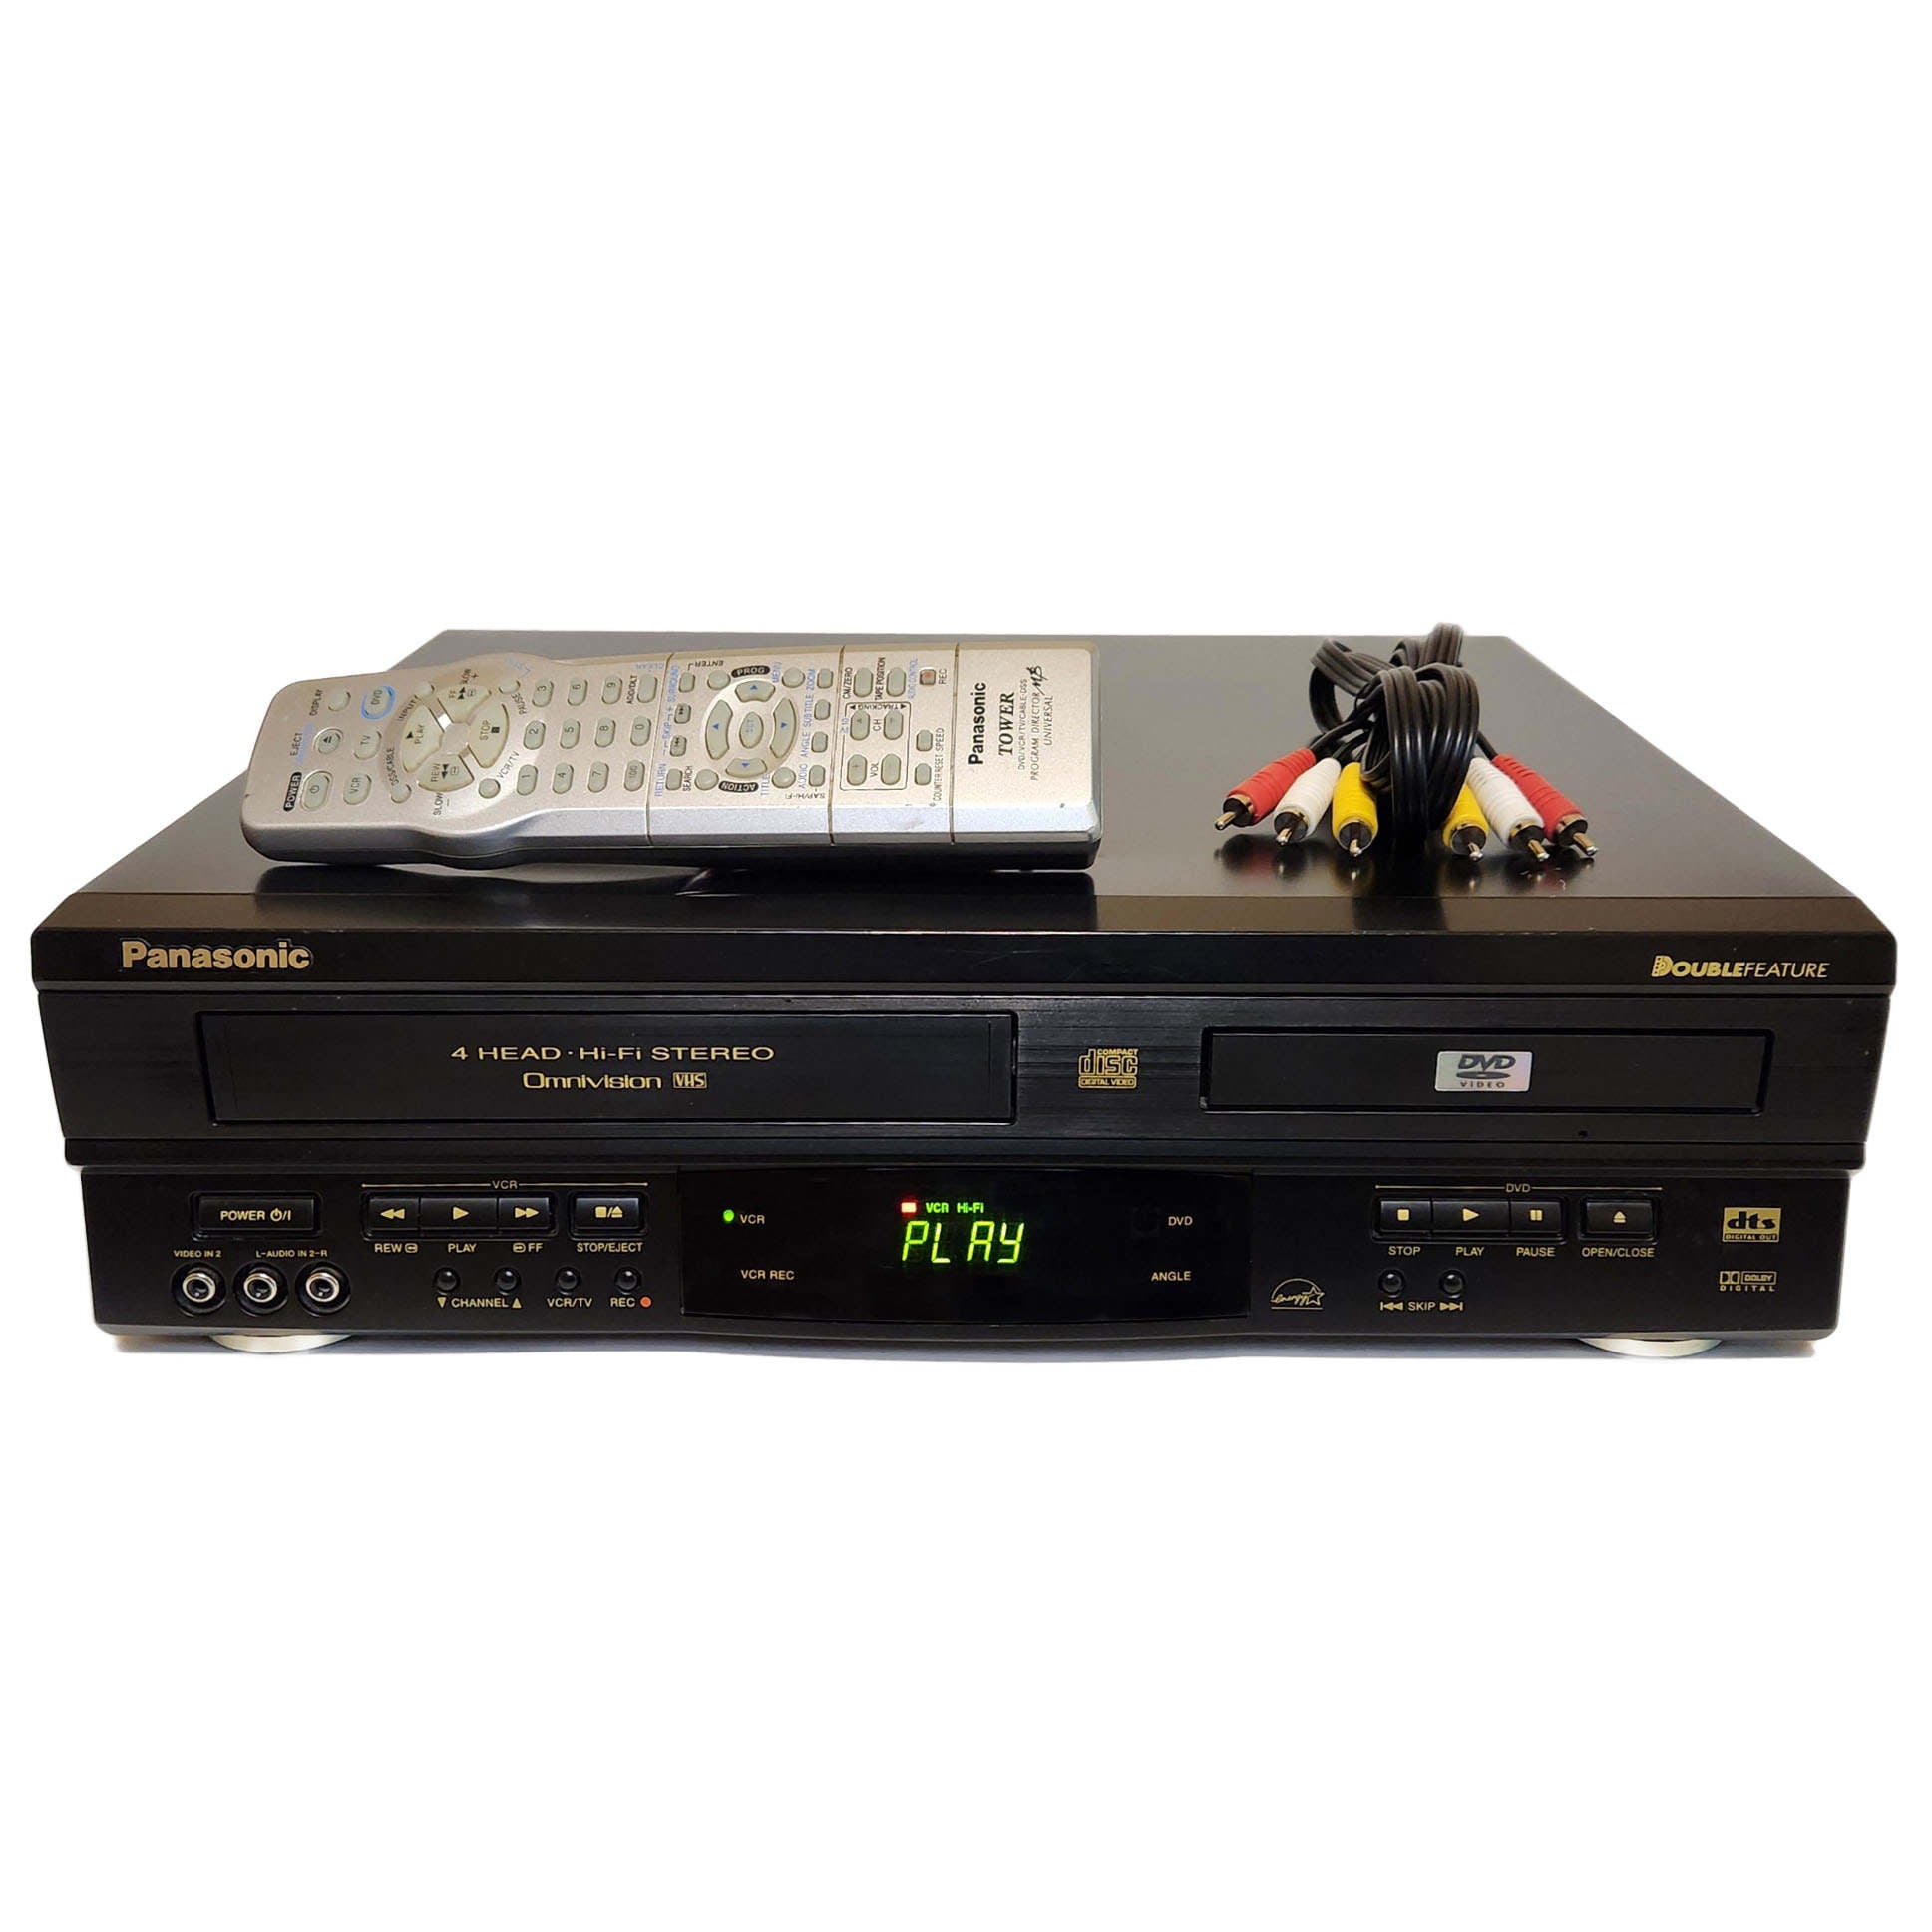 Panasonic PV-D4742 Omnivision VCR/DVD Player Combo